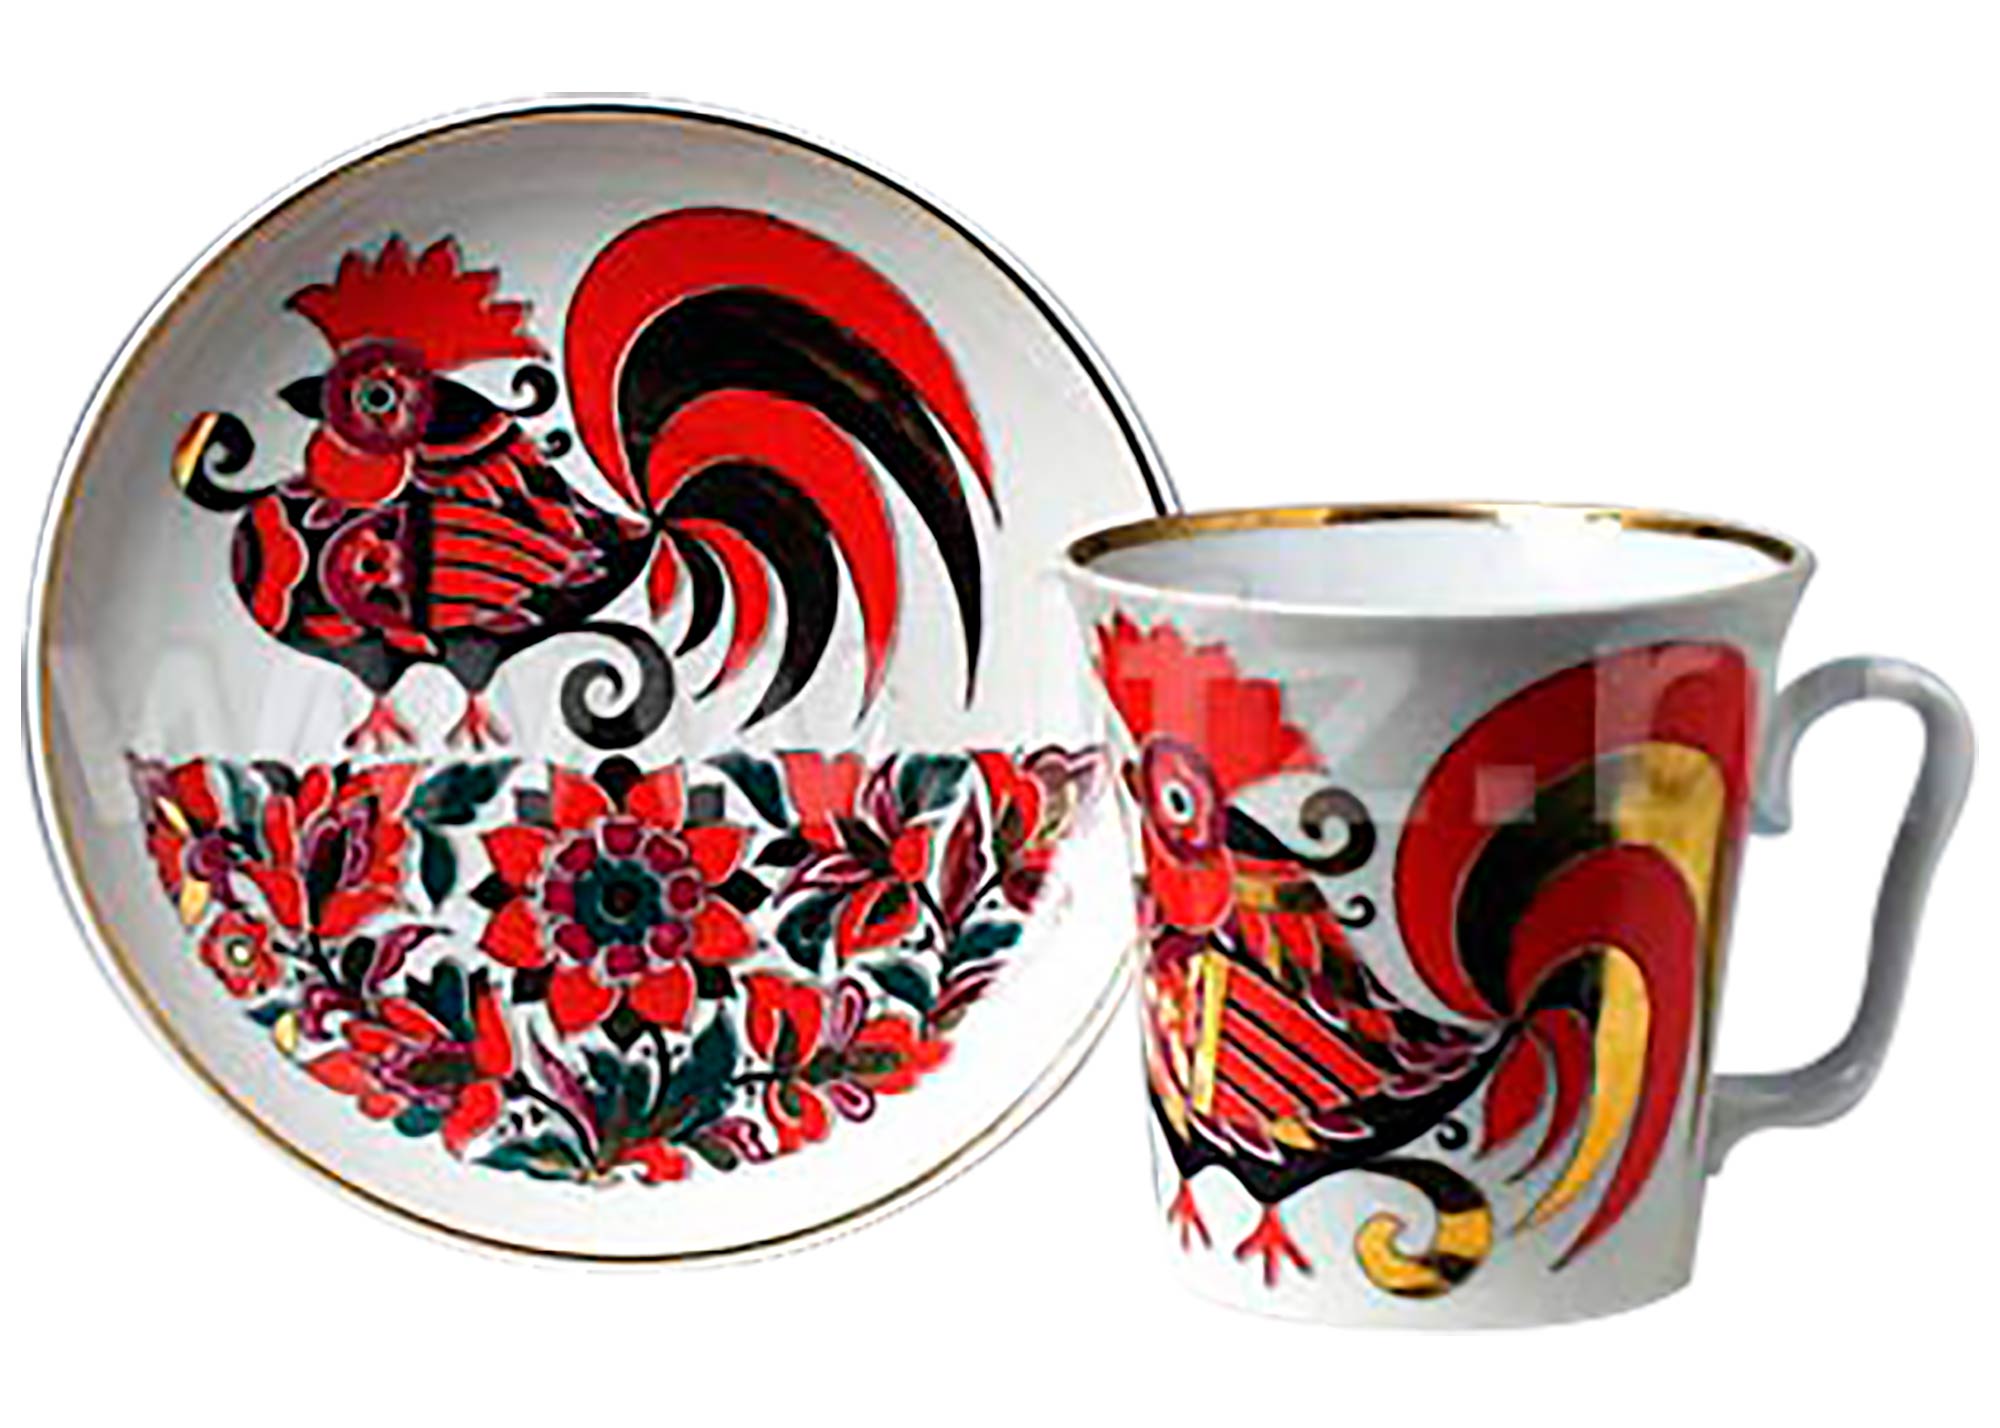 Buy Red Rooster Mug and Saucer at GoldenCockerel.com